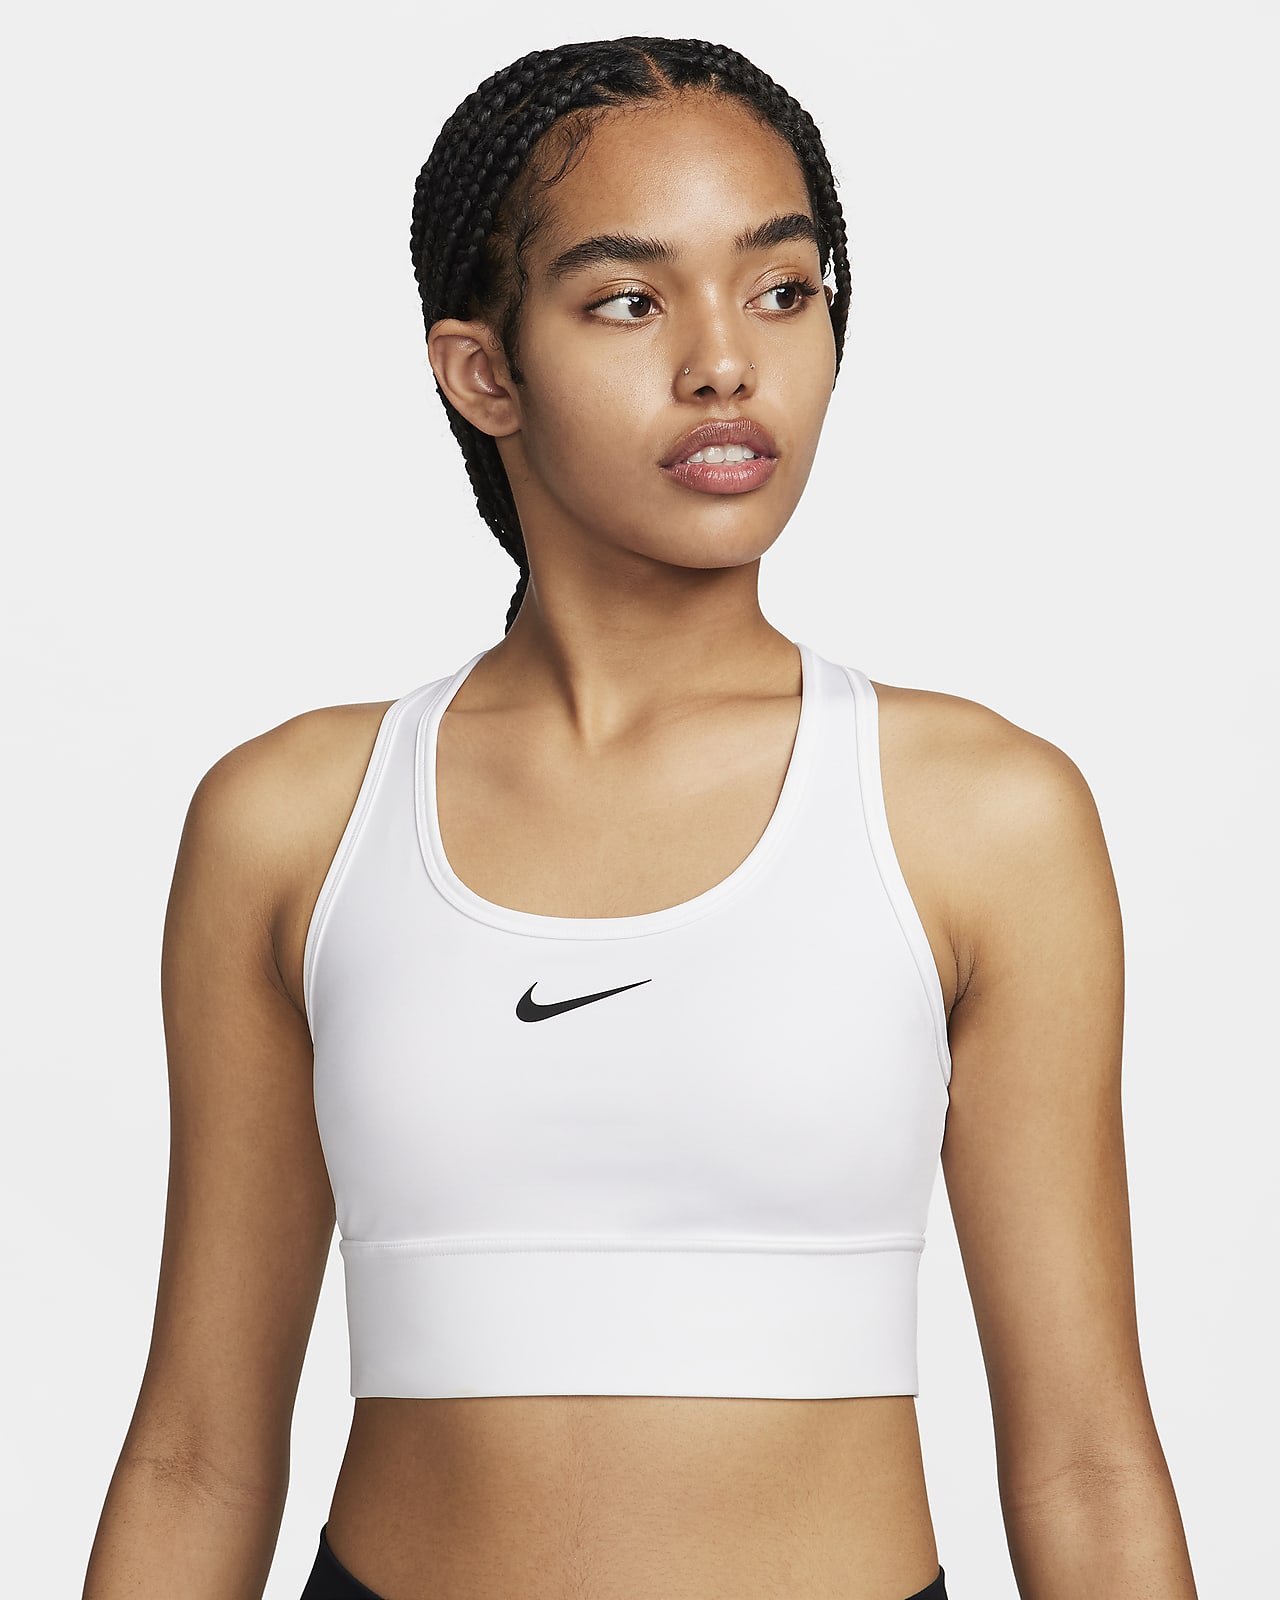 Girls Sports Bras. Nike PT